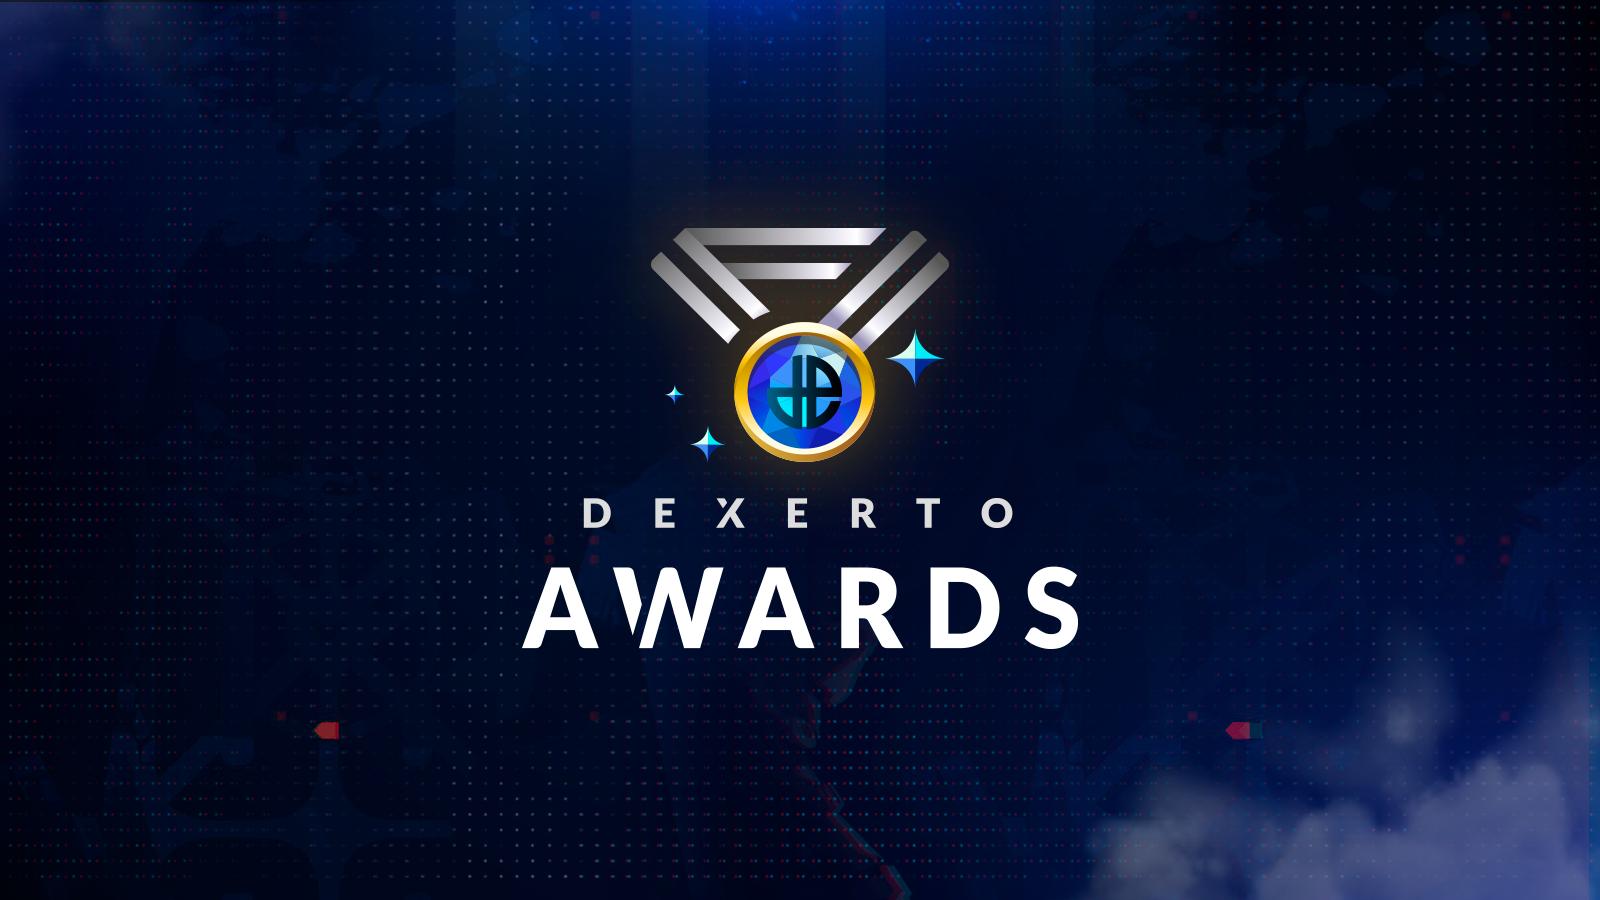 Dexerto Awards 2020 feature image